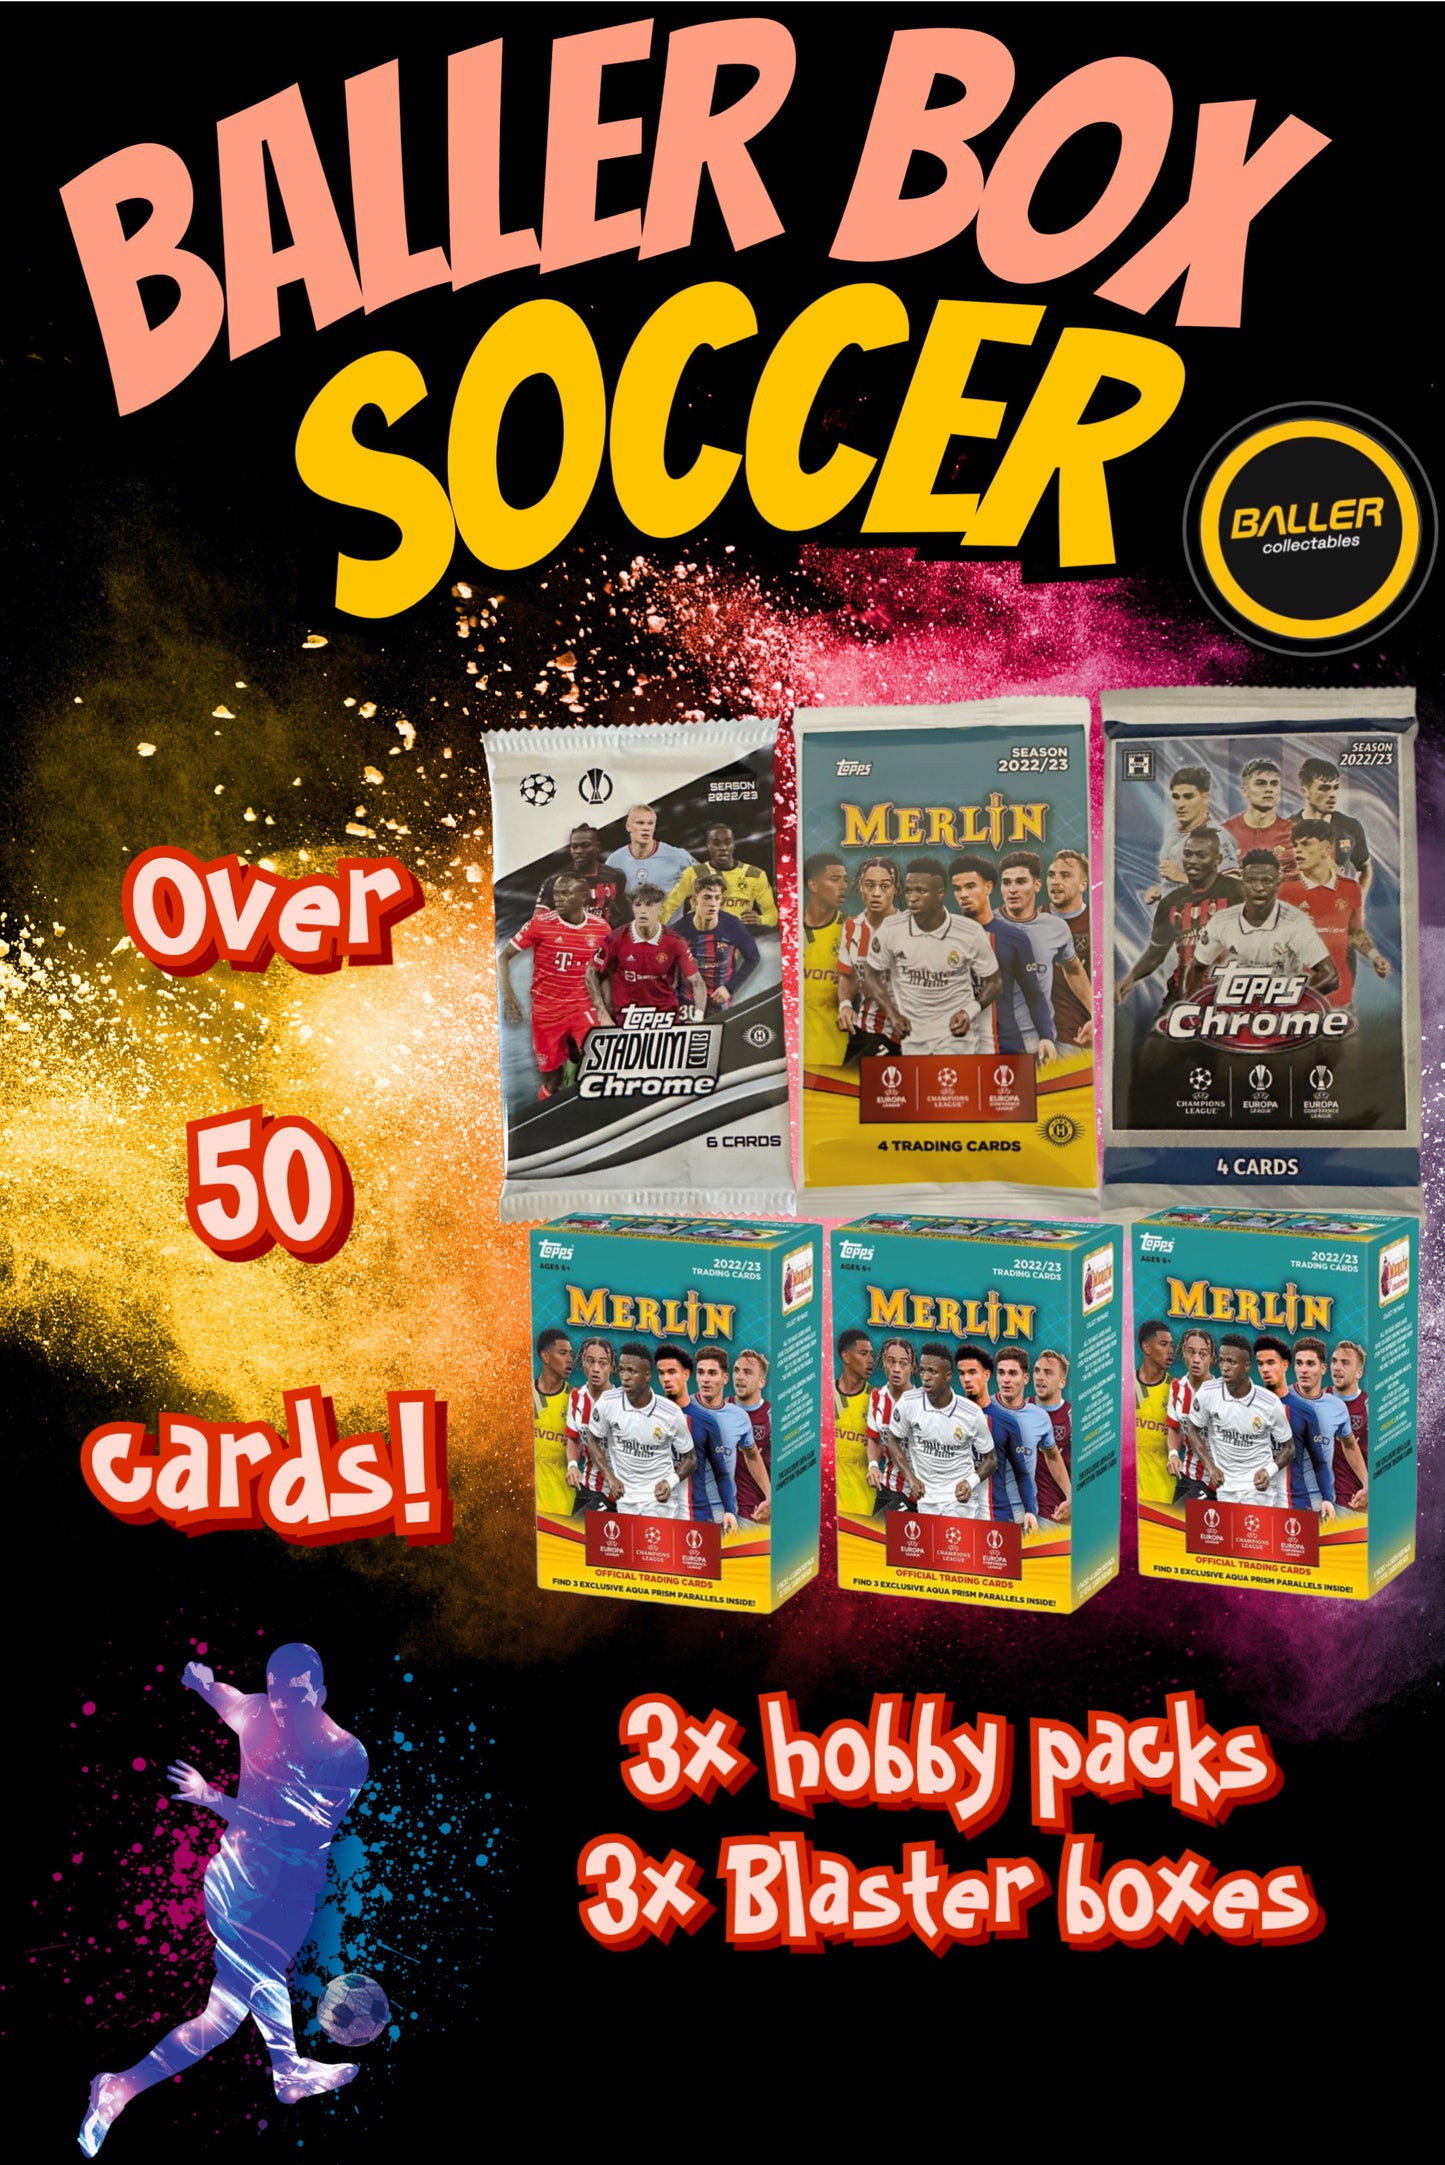 BALLER BOX Soccer Edition. Great VALUE!